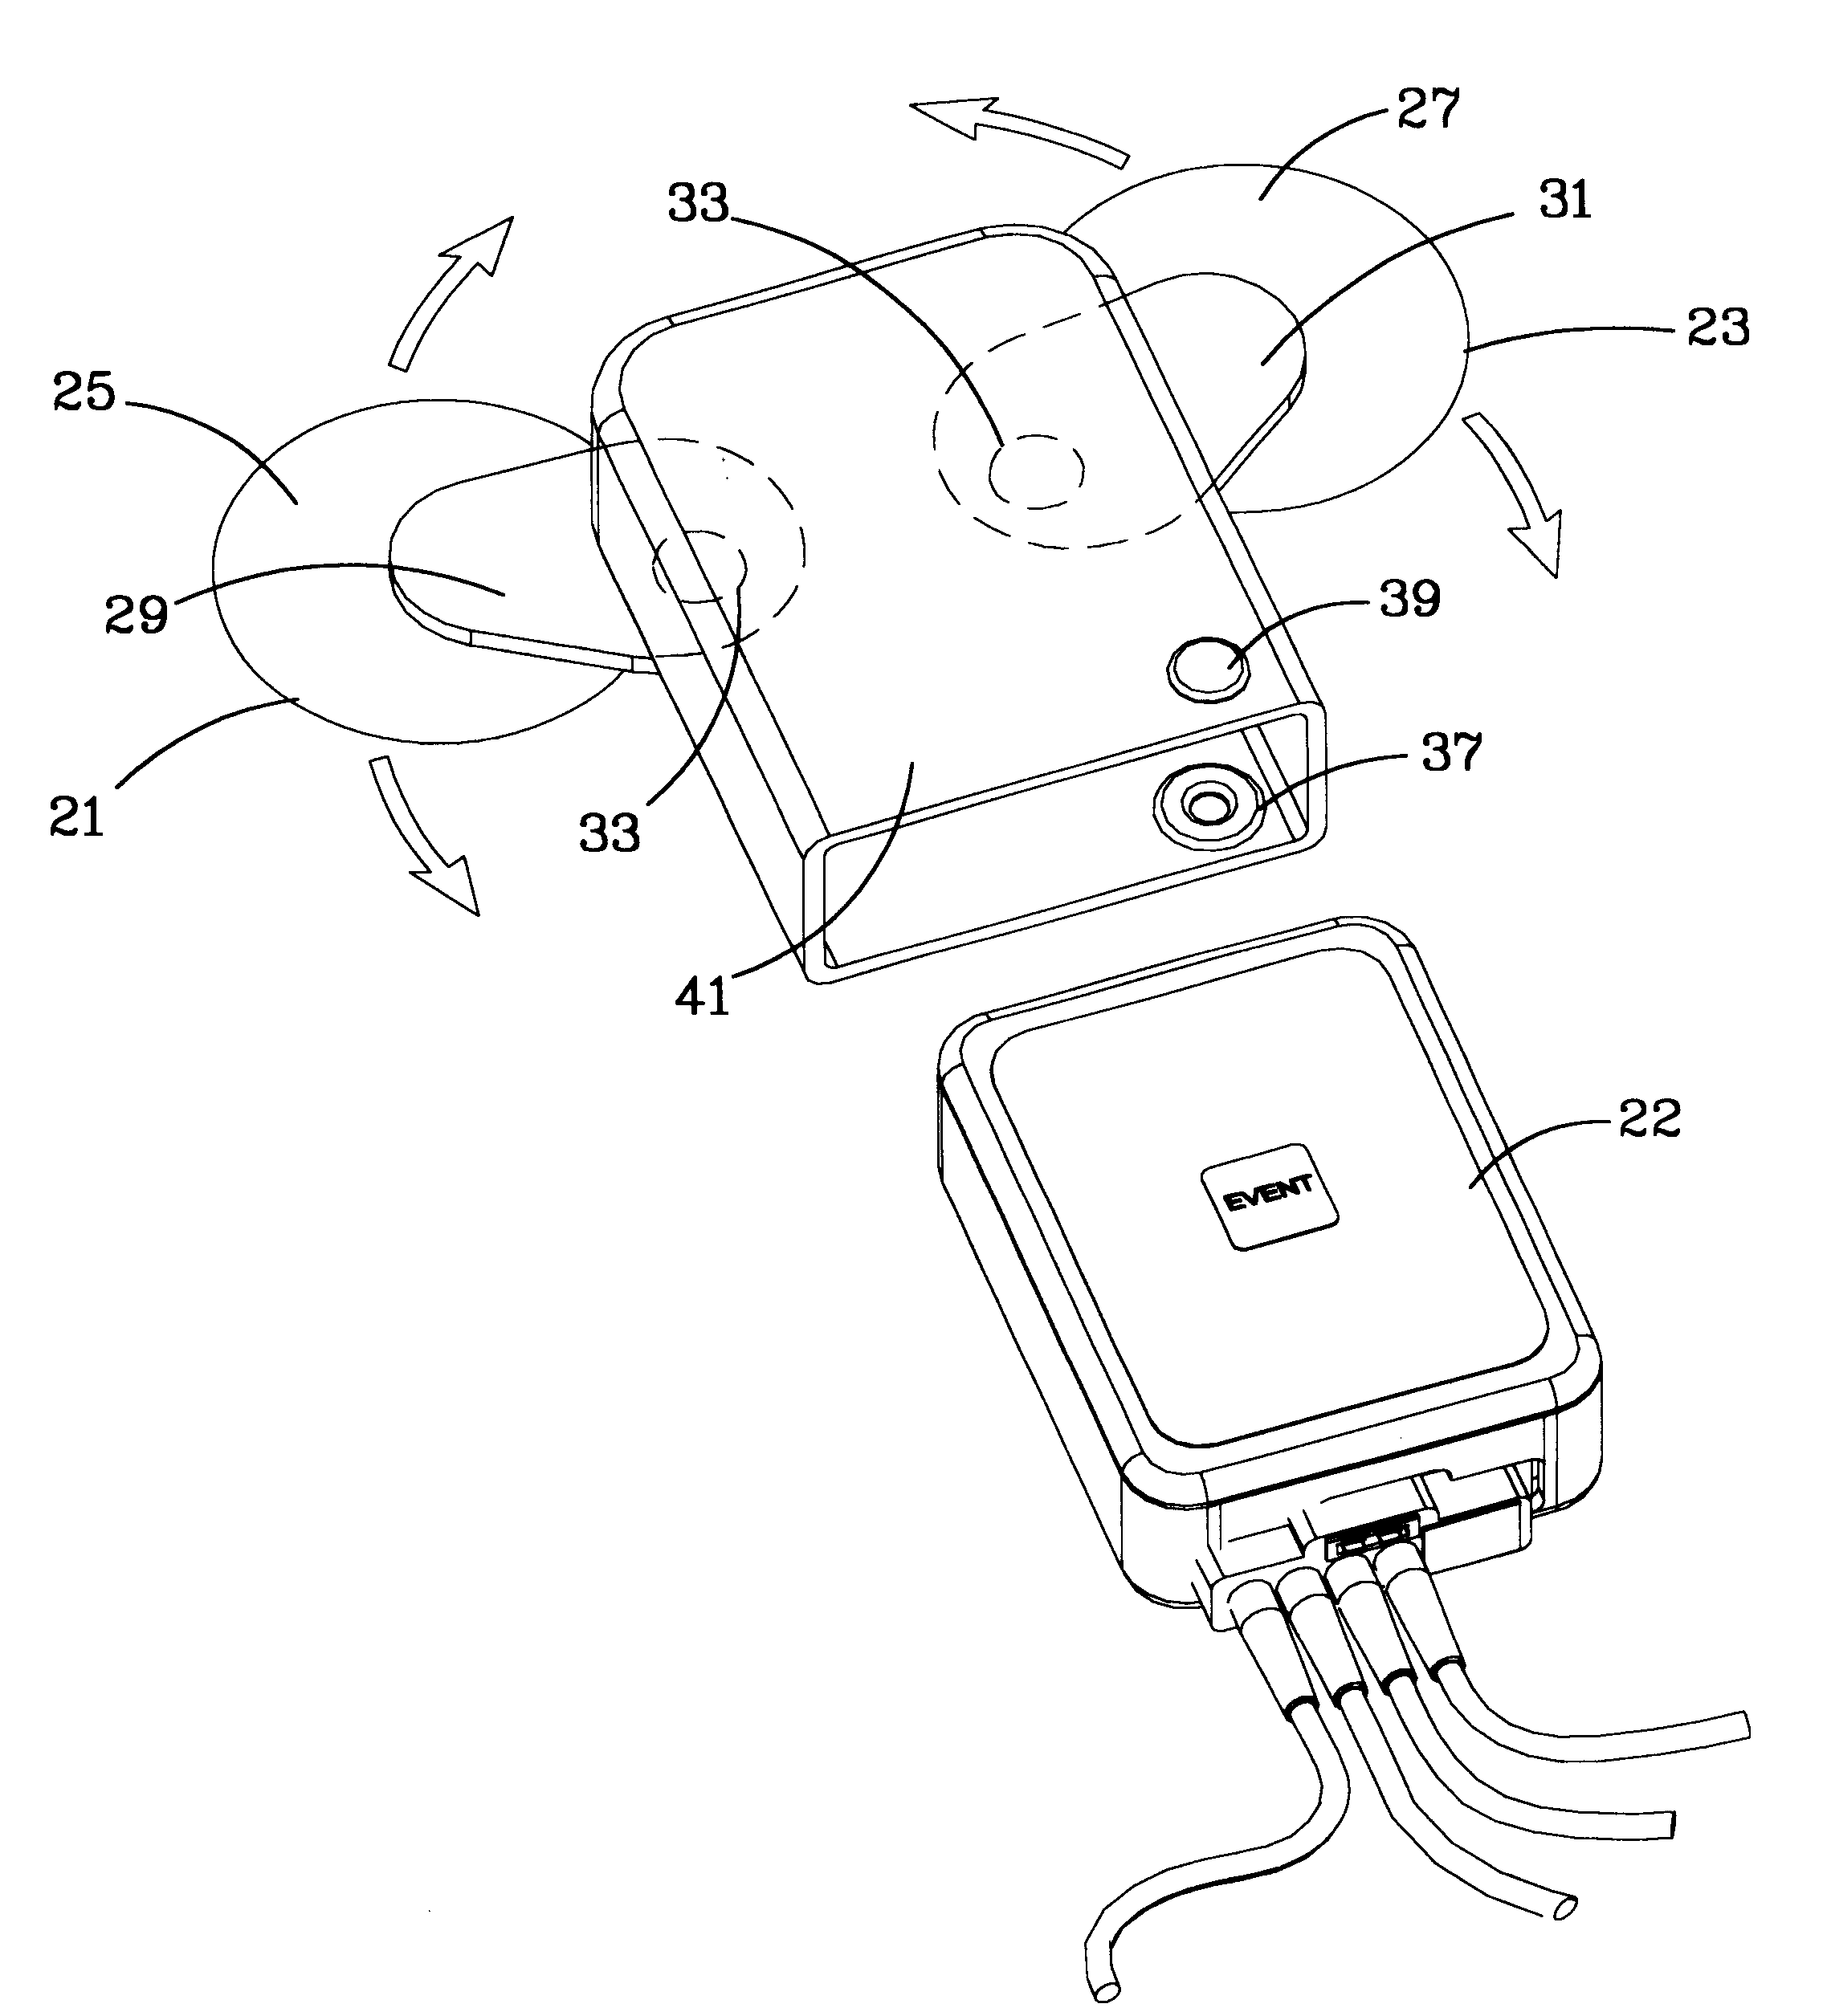 Ambulatory physio-kinetic monitor with envelope enclosure